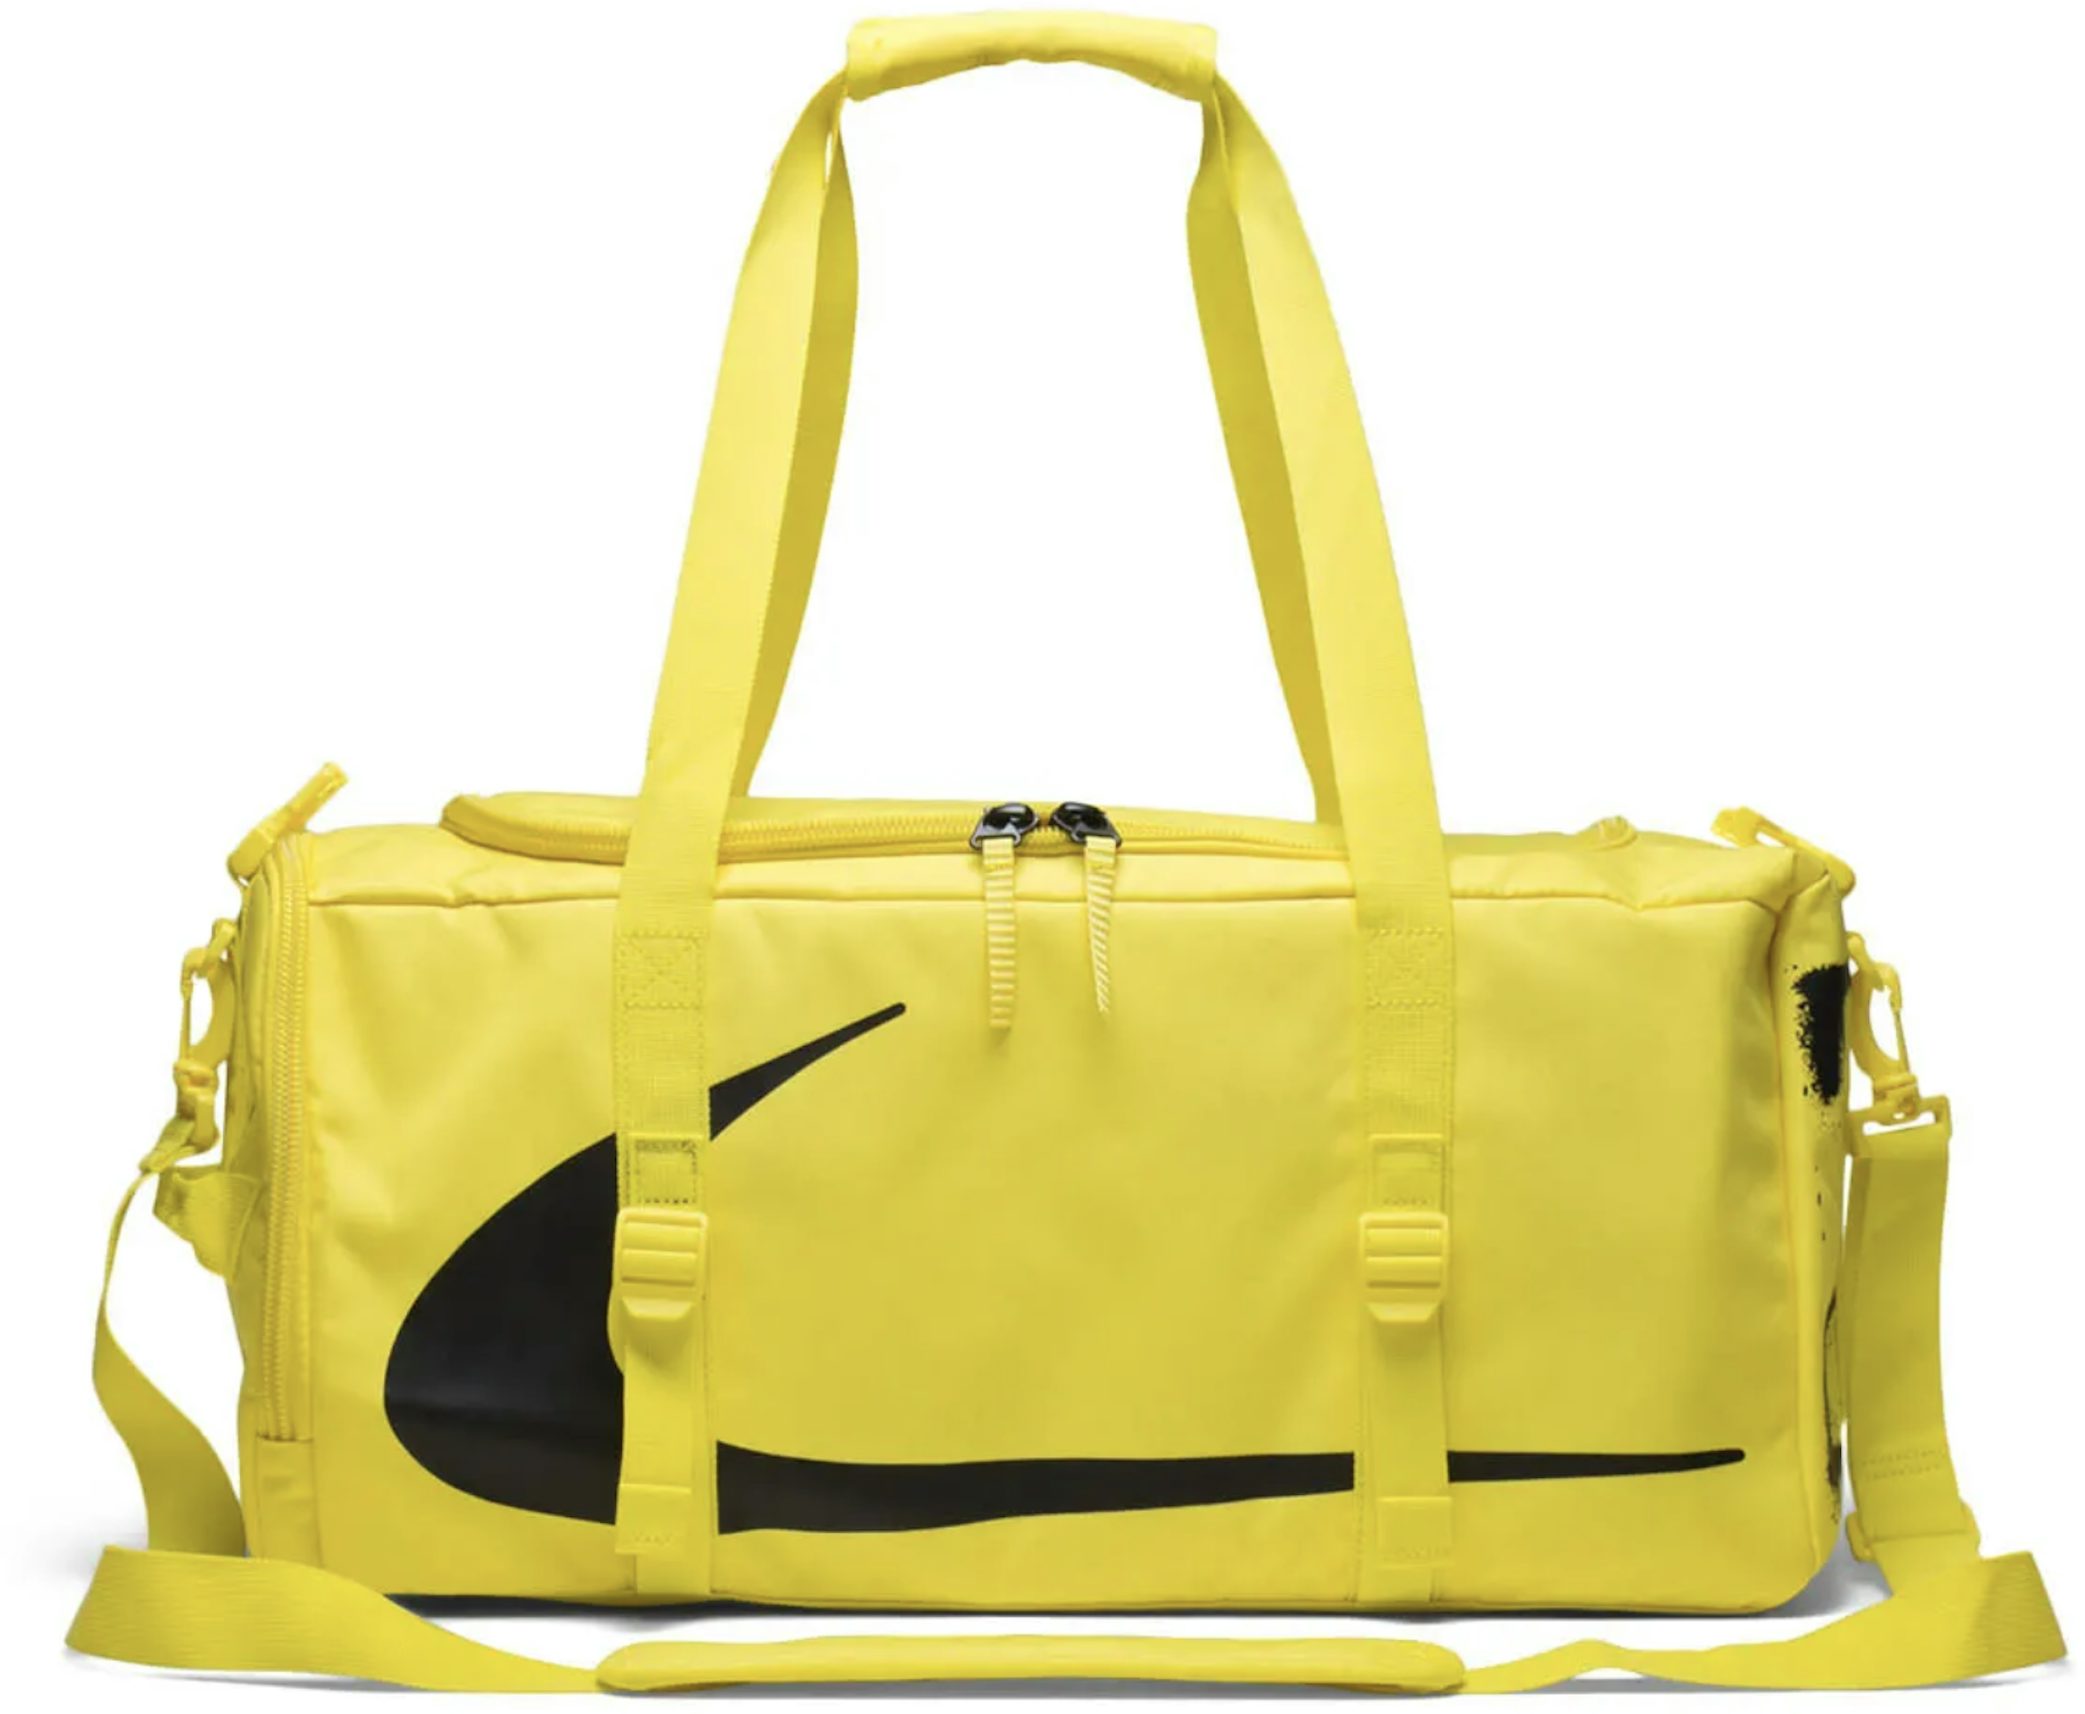 WTS BNWT Nike off White Yellow Duffle Shoulder Bag, Men's Fashion